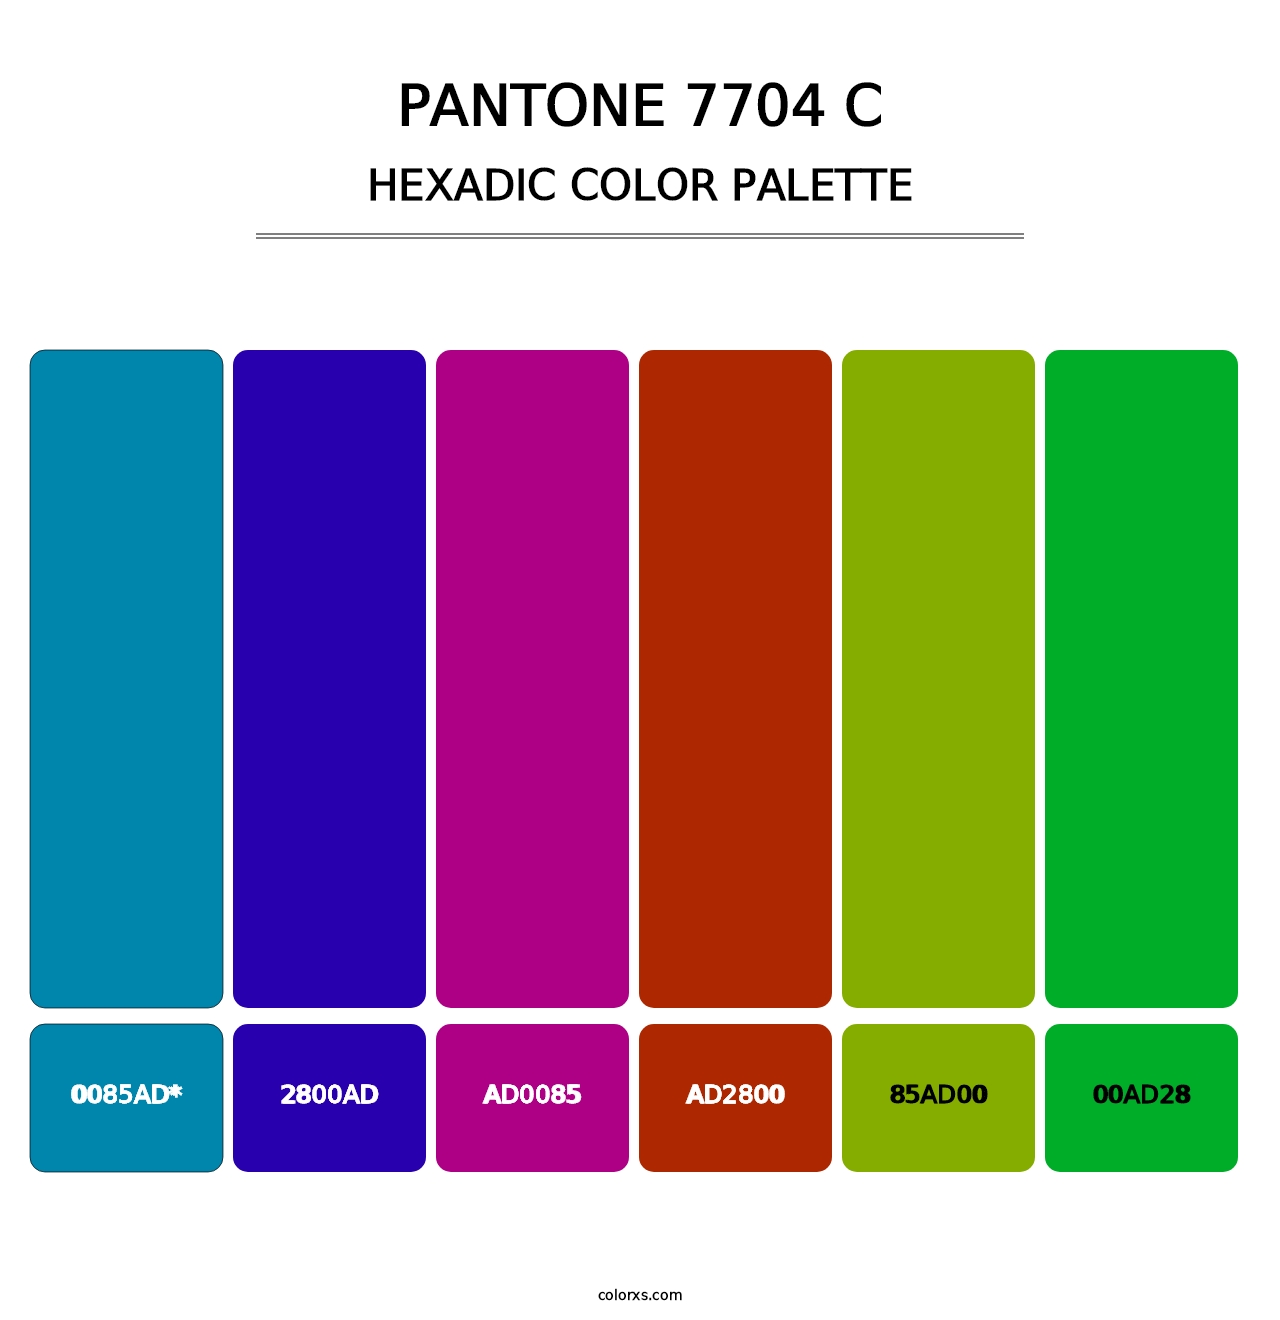 PANTONE 7704 C - Hexadic Color Palette